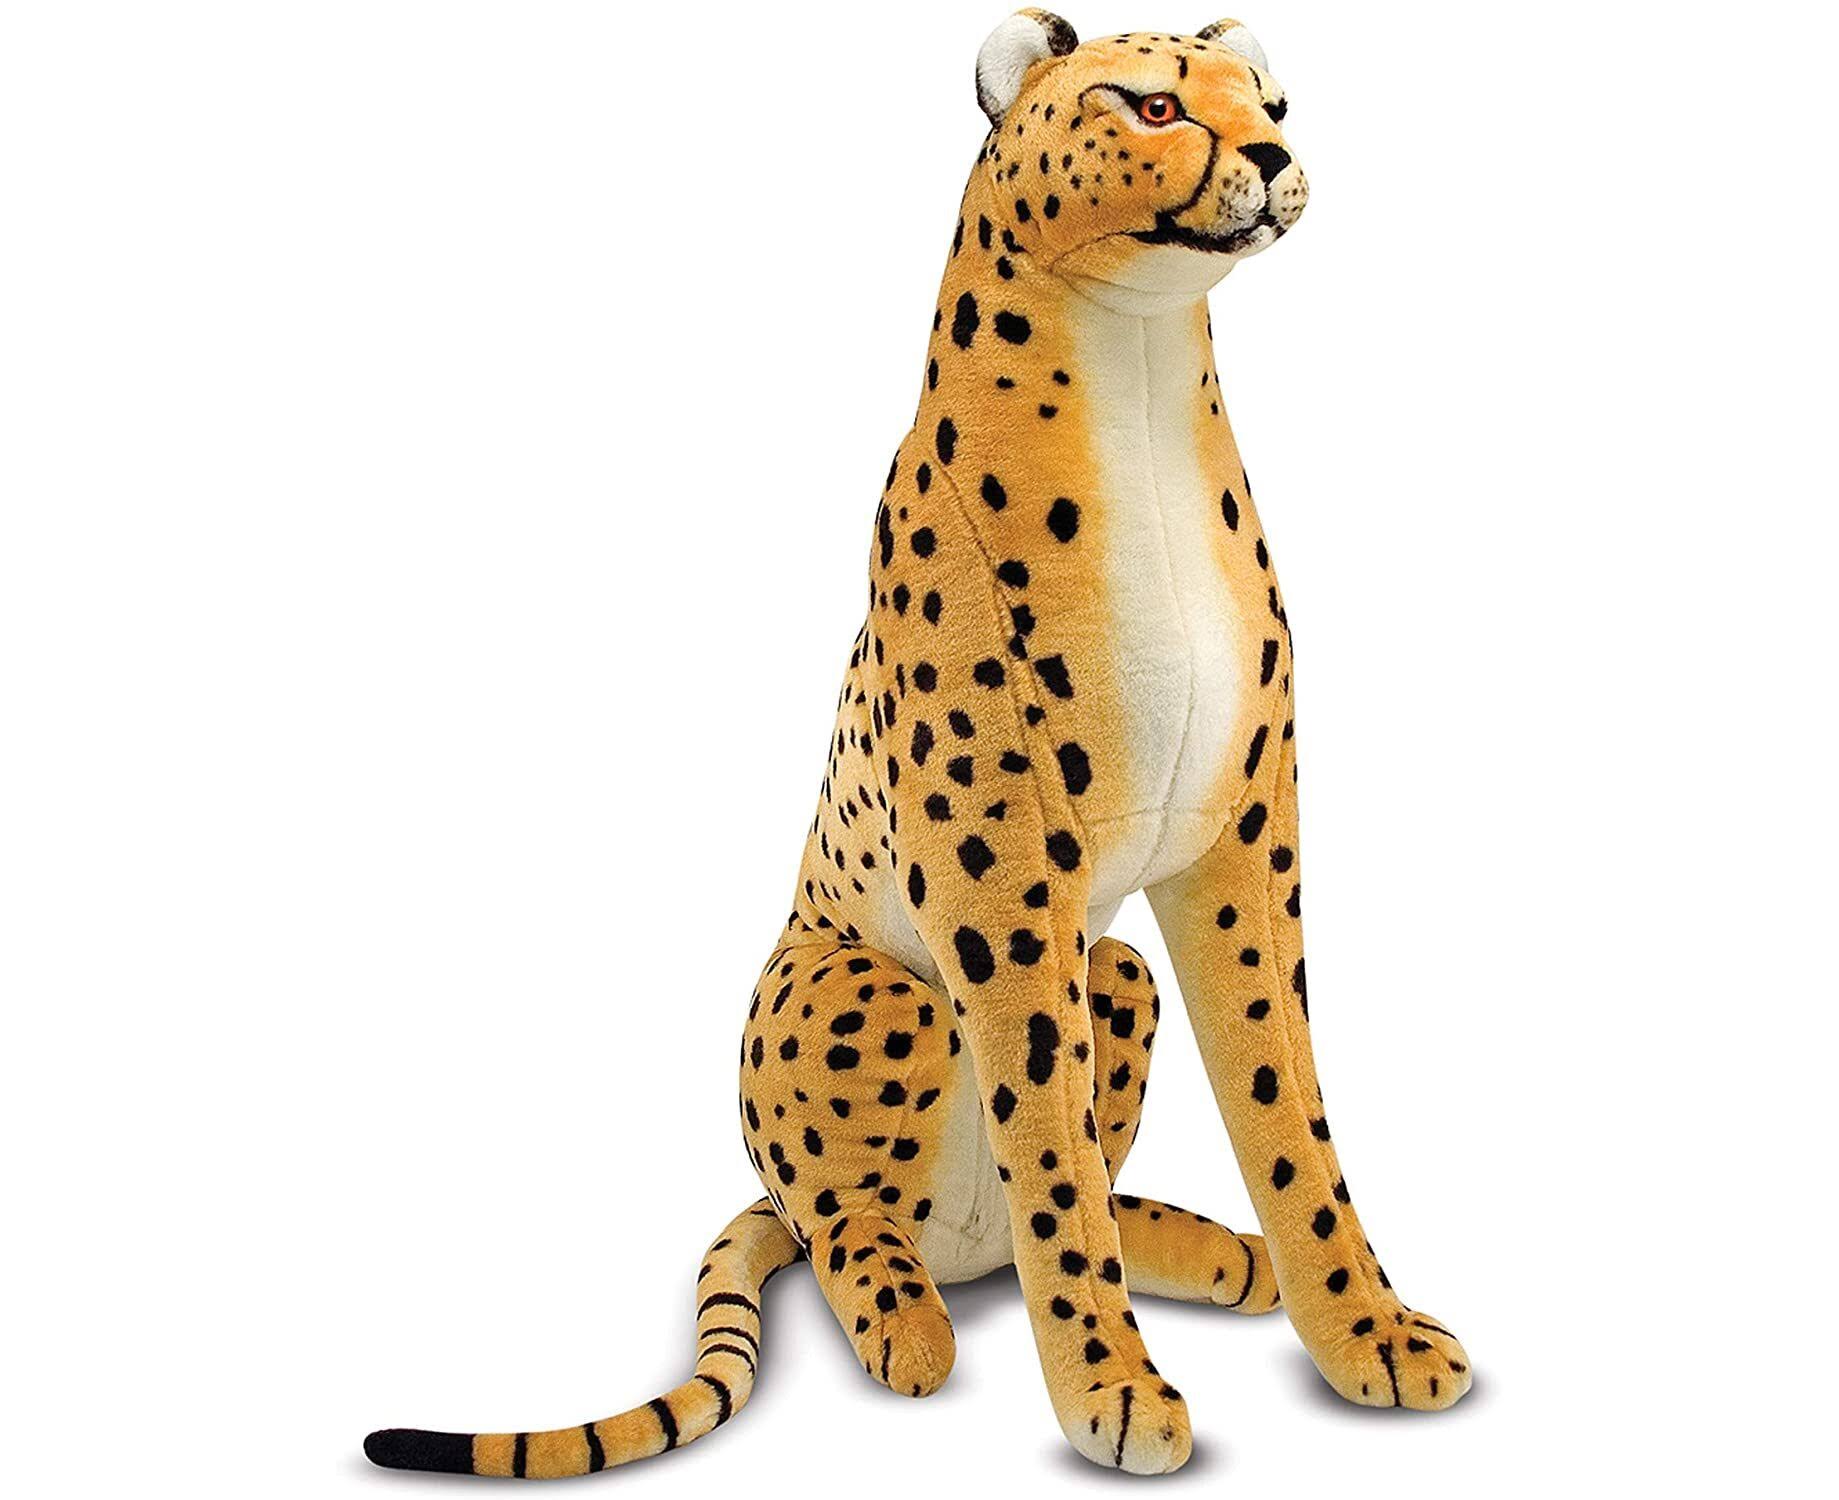 Melissa and Doug Cheetah Plush Stuffed Animal Toy